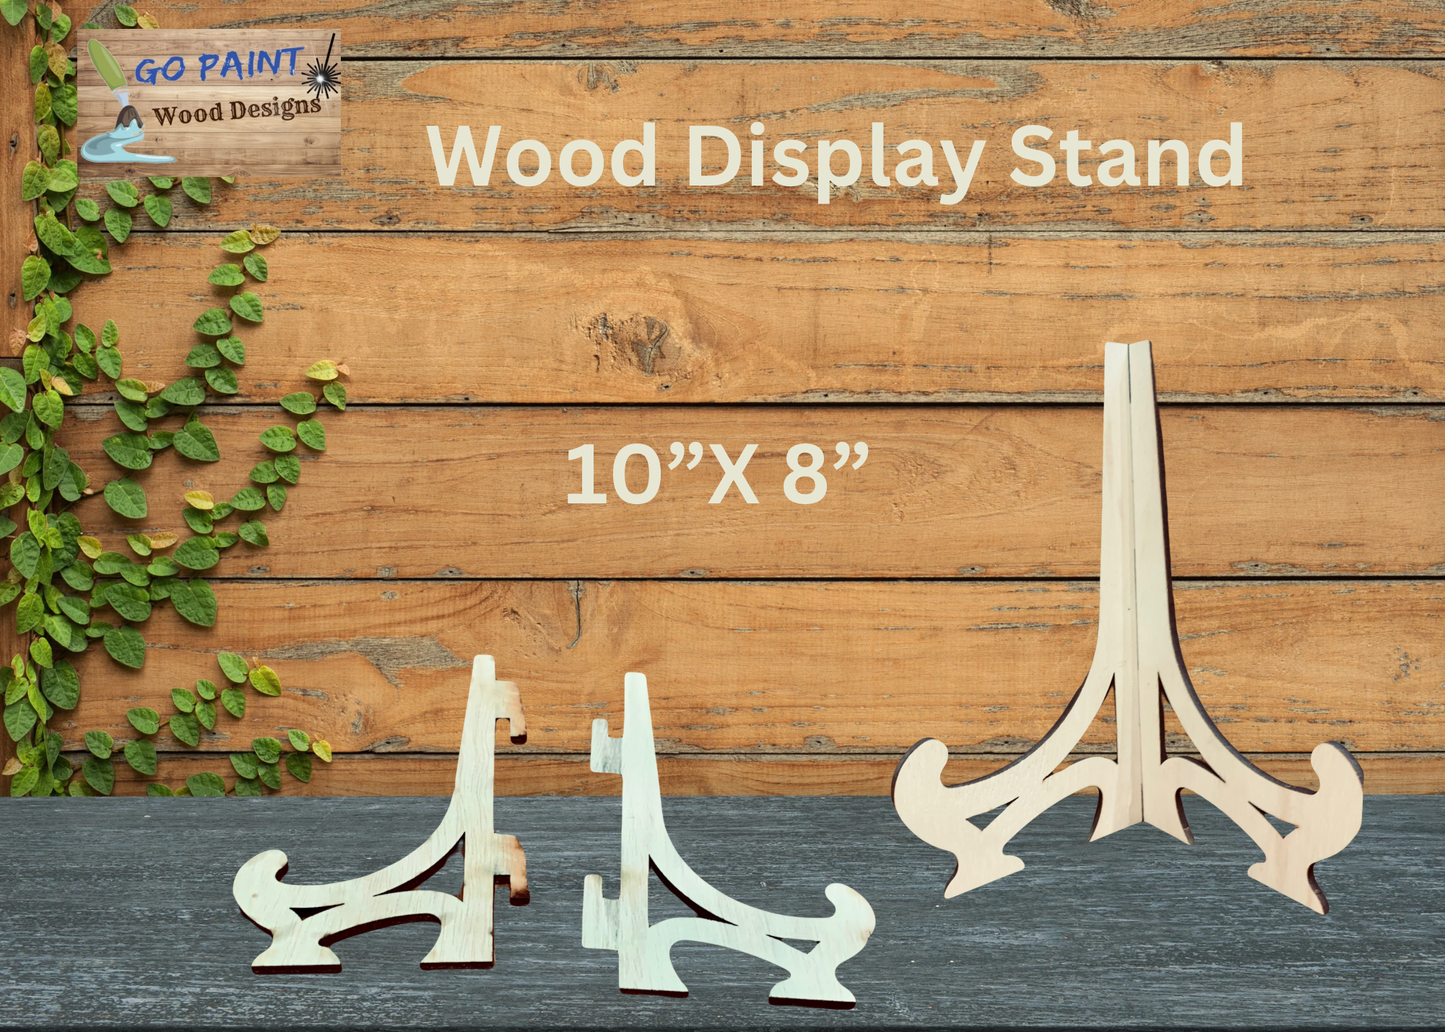 Wood Display Stand 10”X 8”